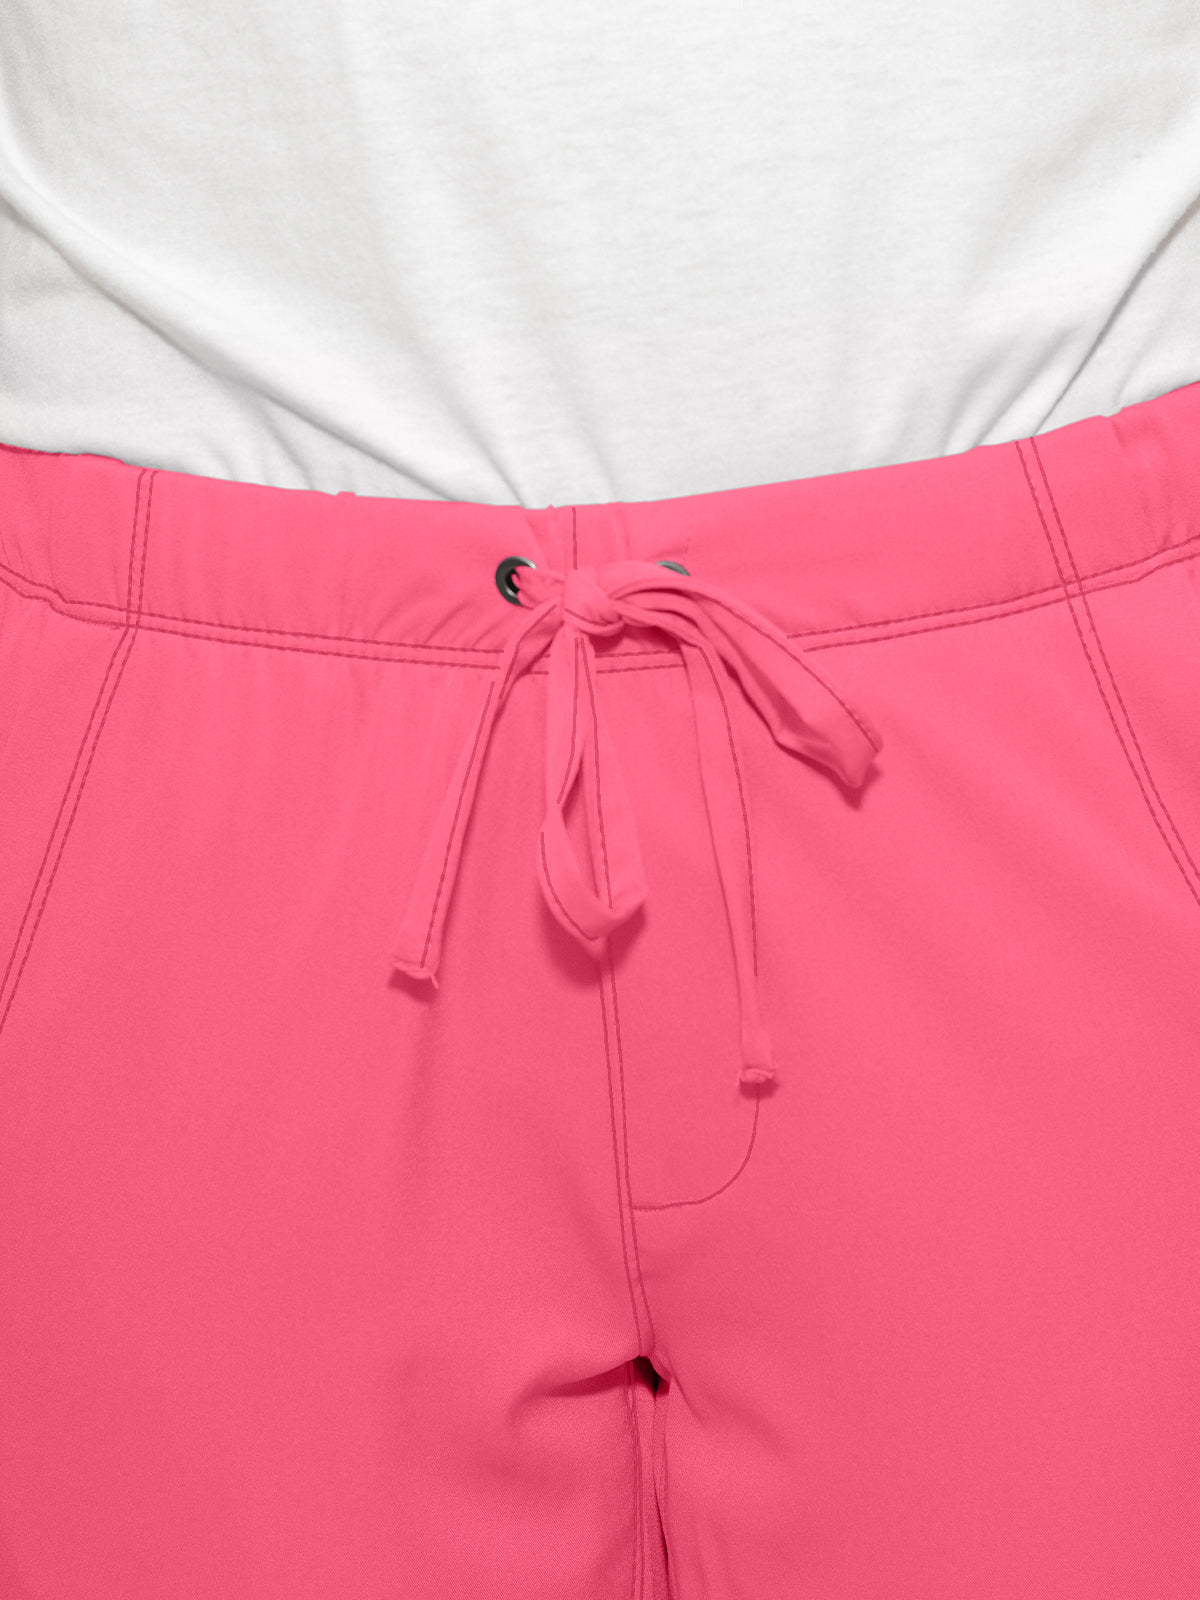 Women's Moisture Wicking Pant - 9560 - Carnation Pink